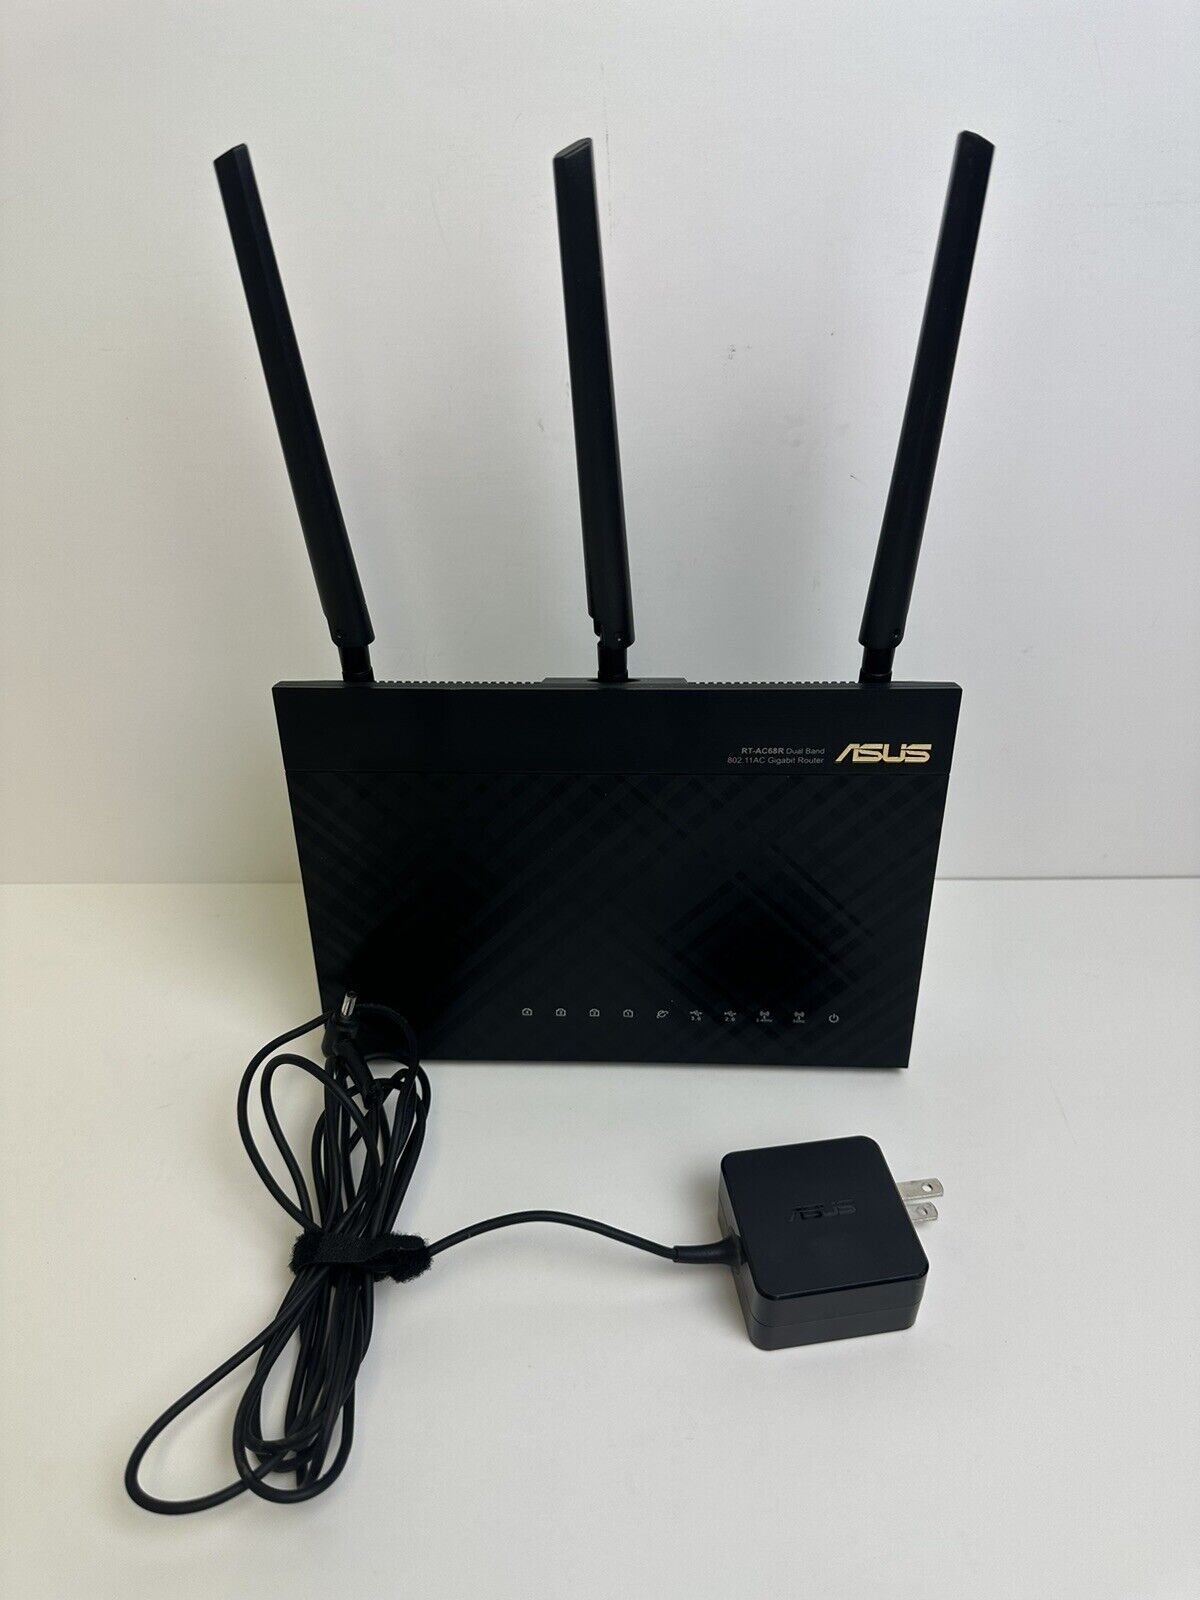 ASUS RT-AC68U AC1900 4 Port Gigabit Wireless AC Router